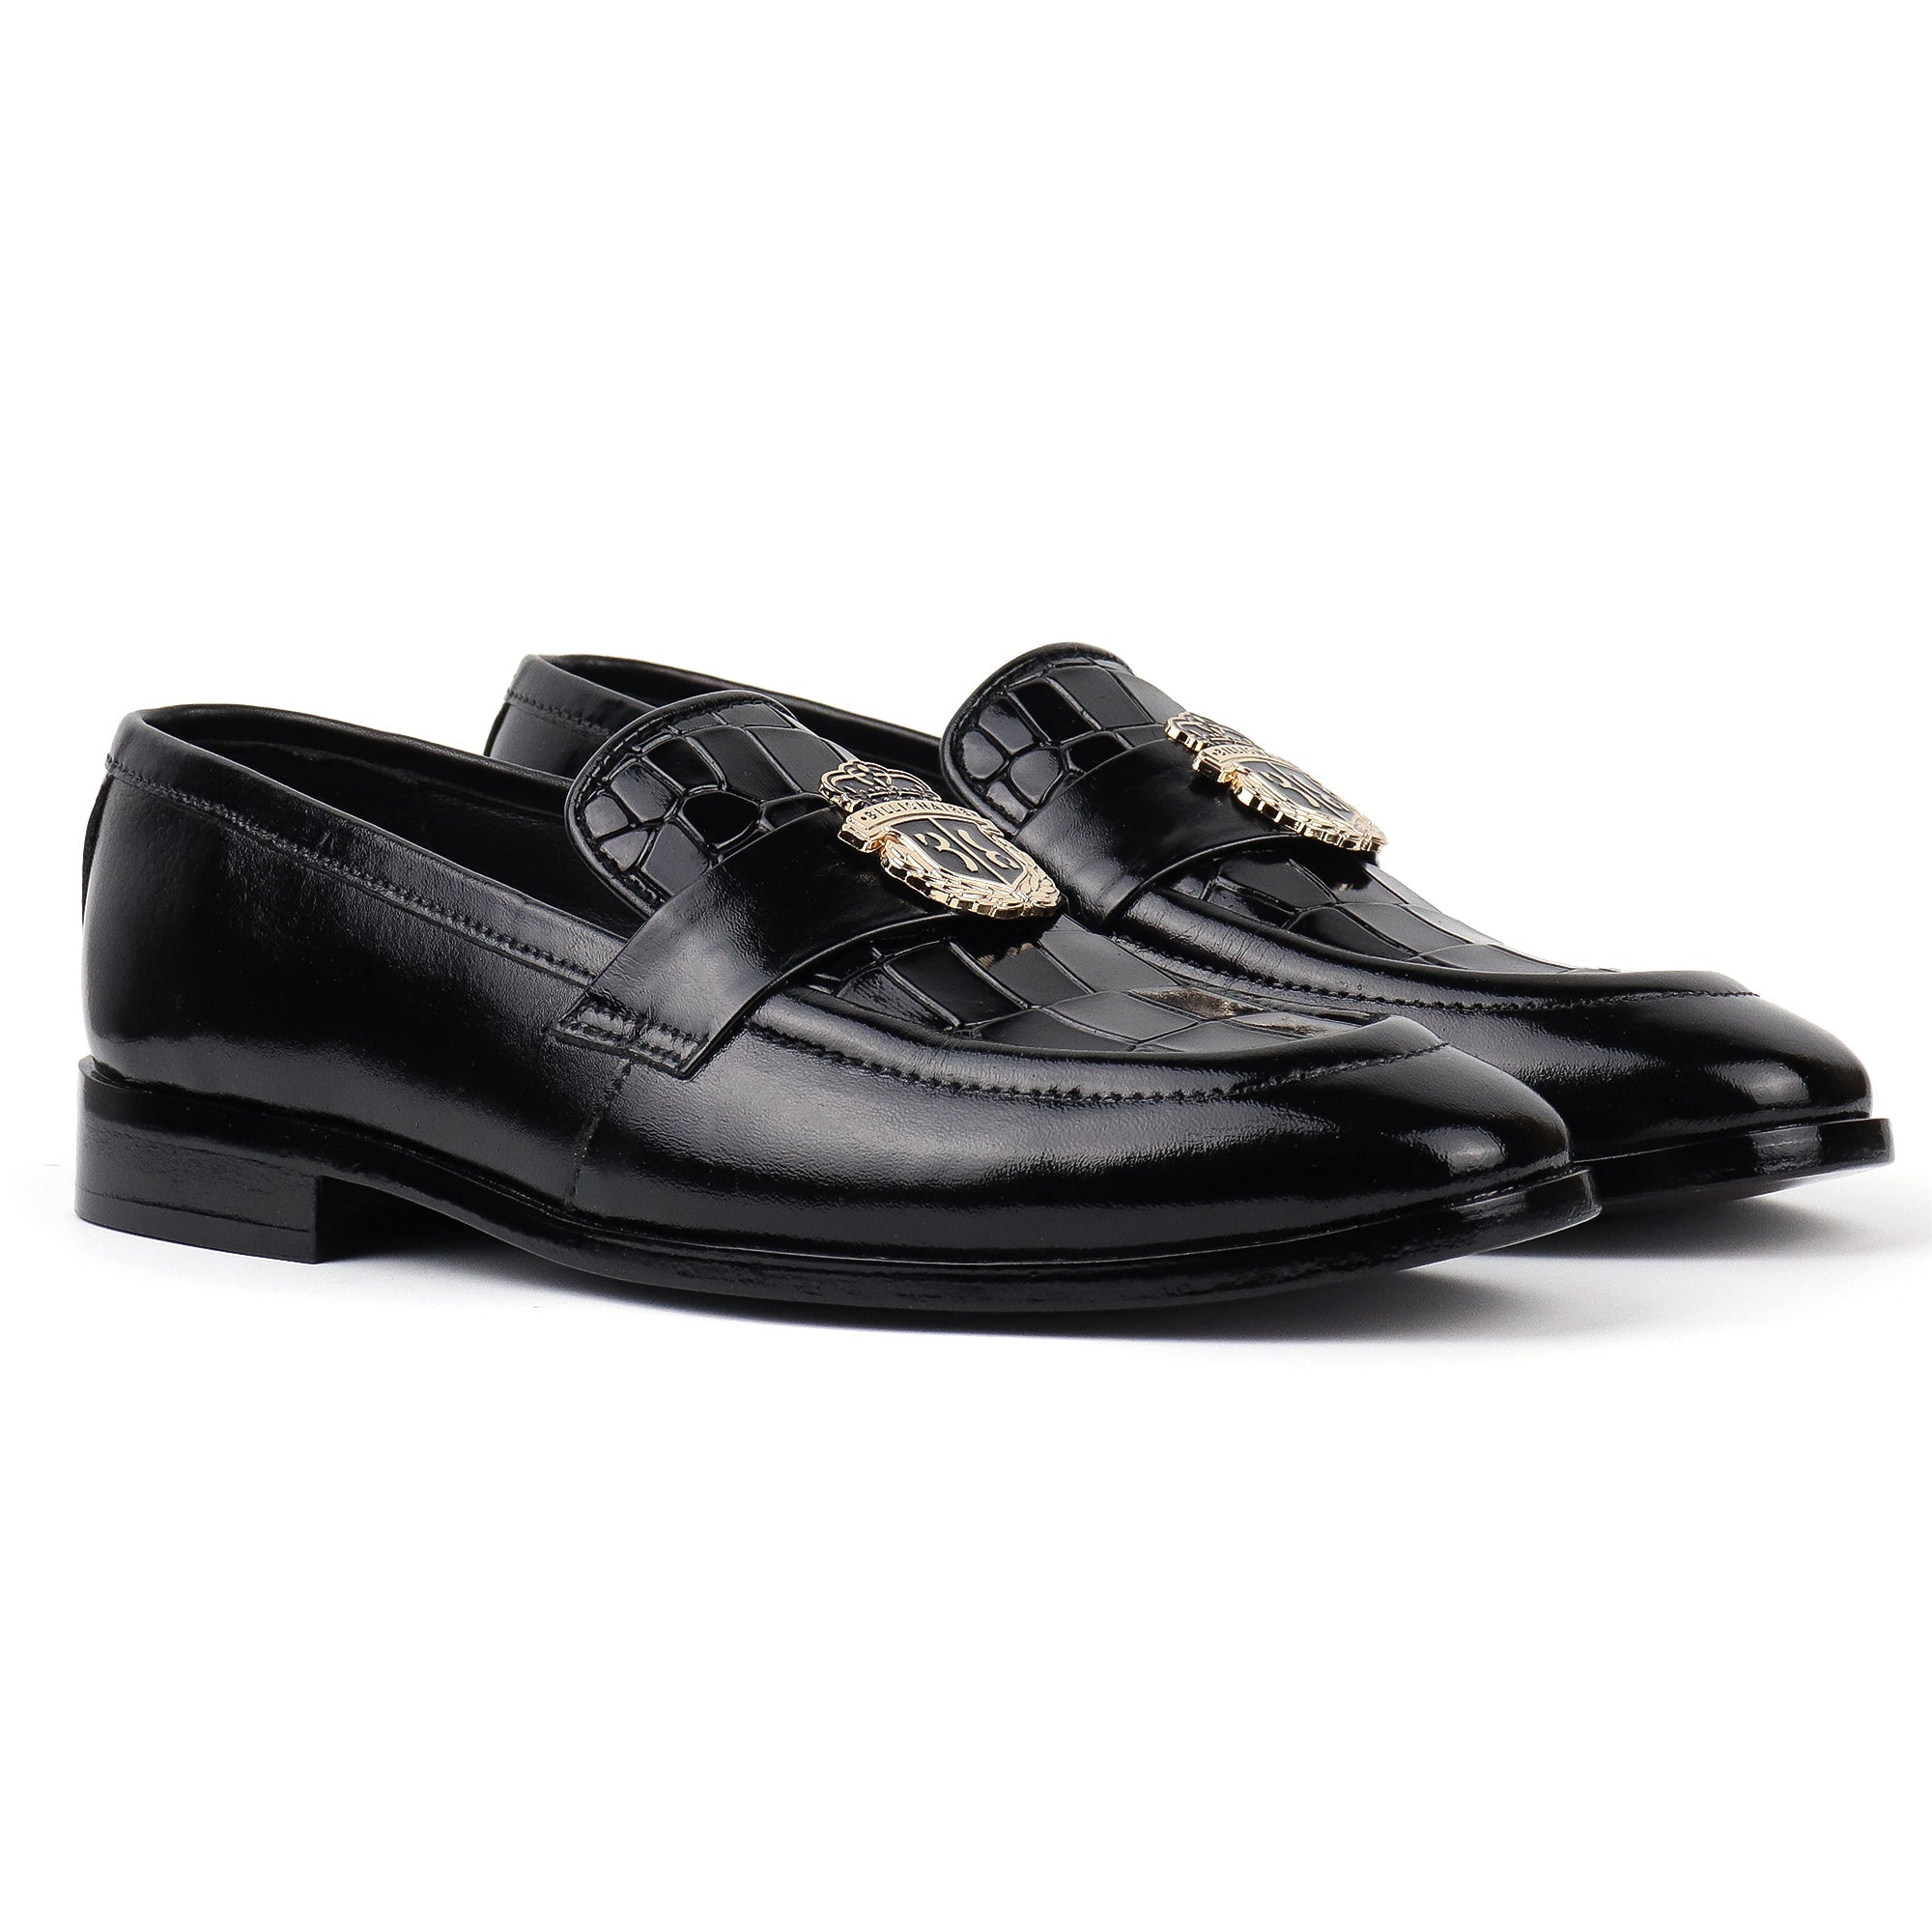 Royal Cx Blnr Black - Premium shoes from royalstepshops - Just Rs.9000! Shop now at ROYAL STEP